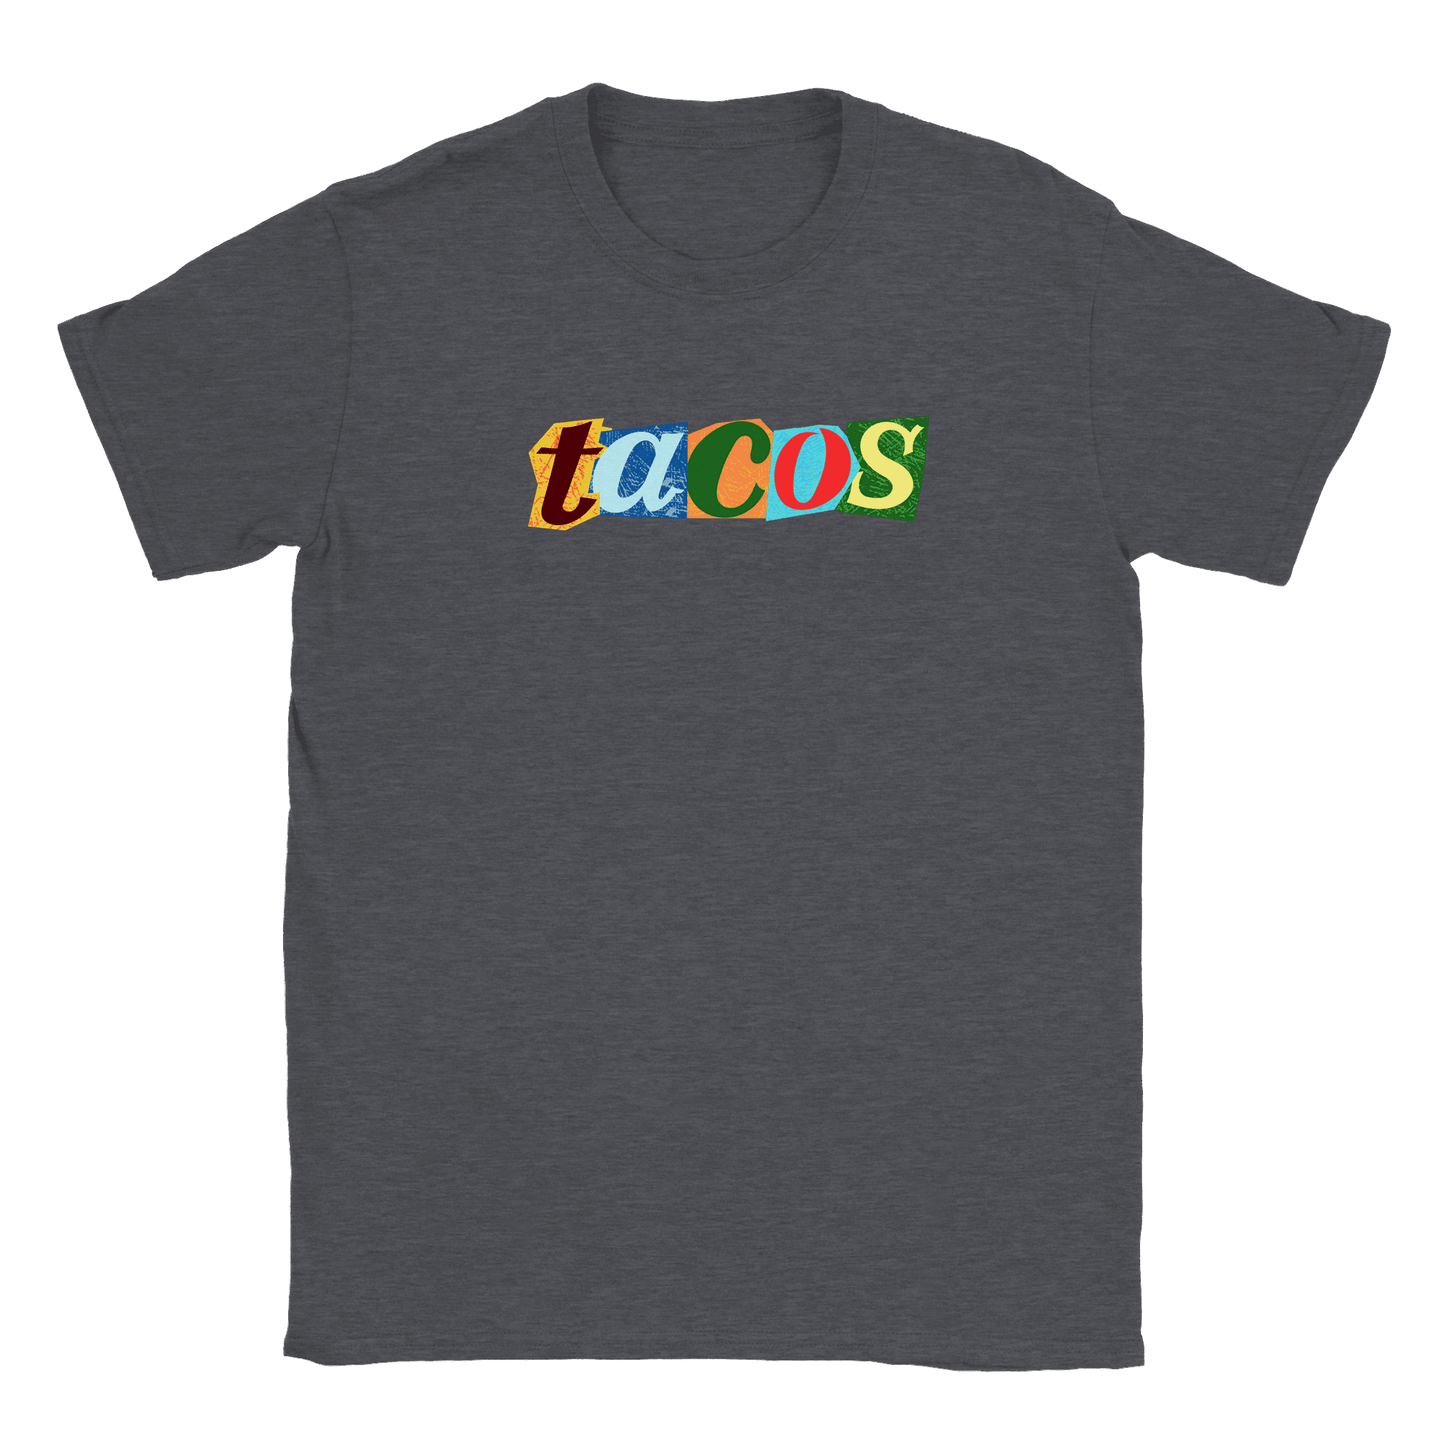 Tacos - T-shirt Mörk Ljung